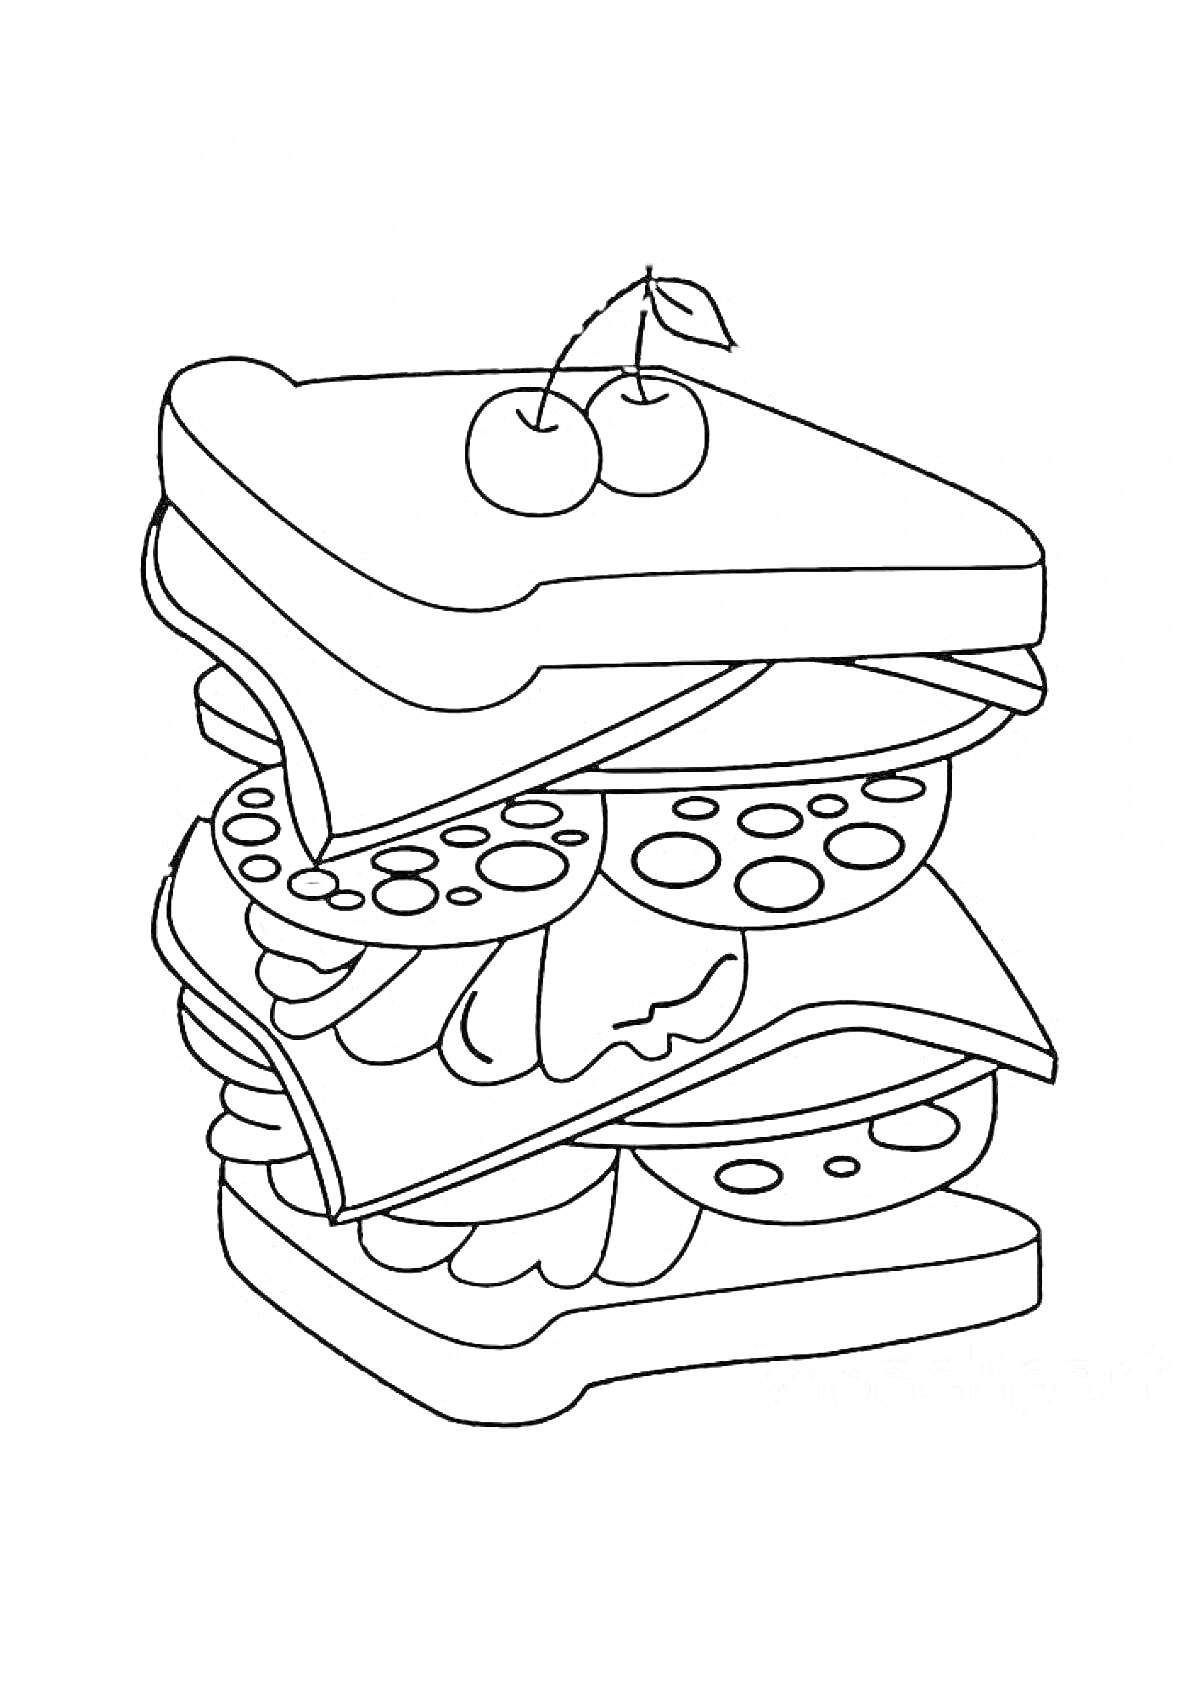 На раскраске изображено: Еда, Вишня, Салат, Мясо, Помидор, Бутерброд, Контурные рисунки